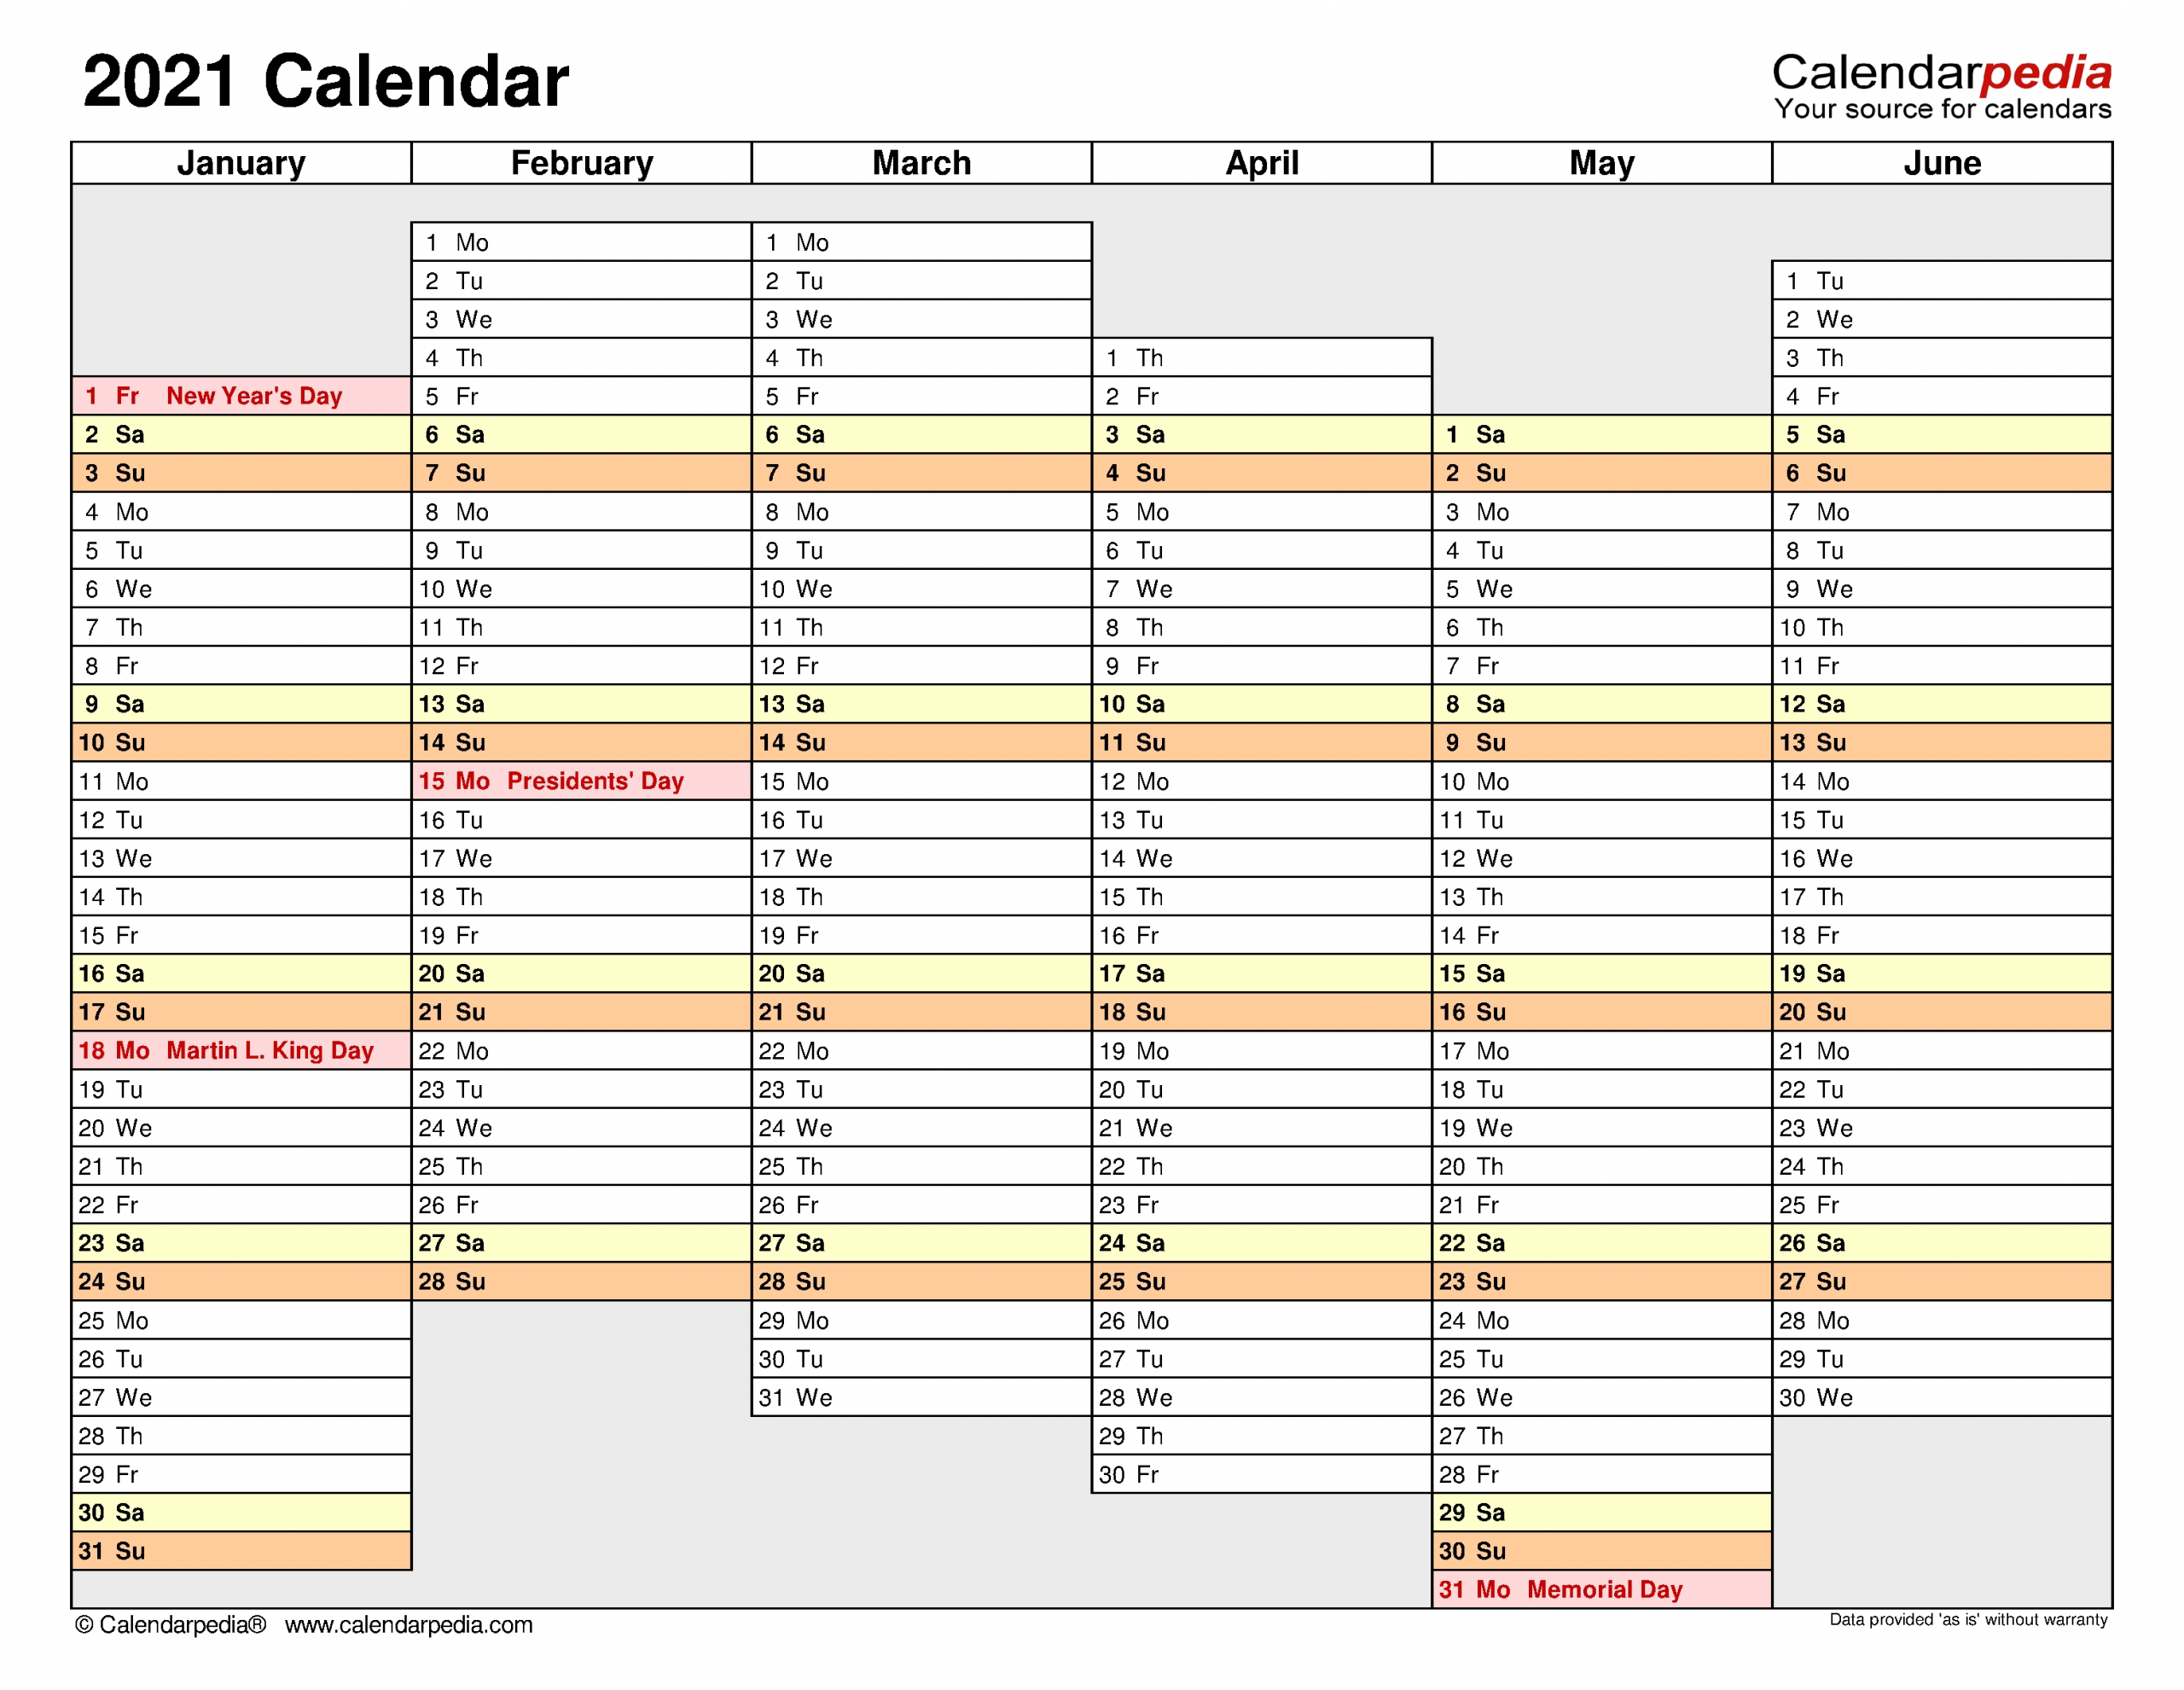 2021 Calendar - Free Printable Excel Templates - Calendarpedia-2021 Leave Planner Excel Template